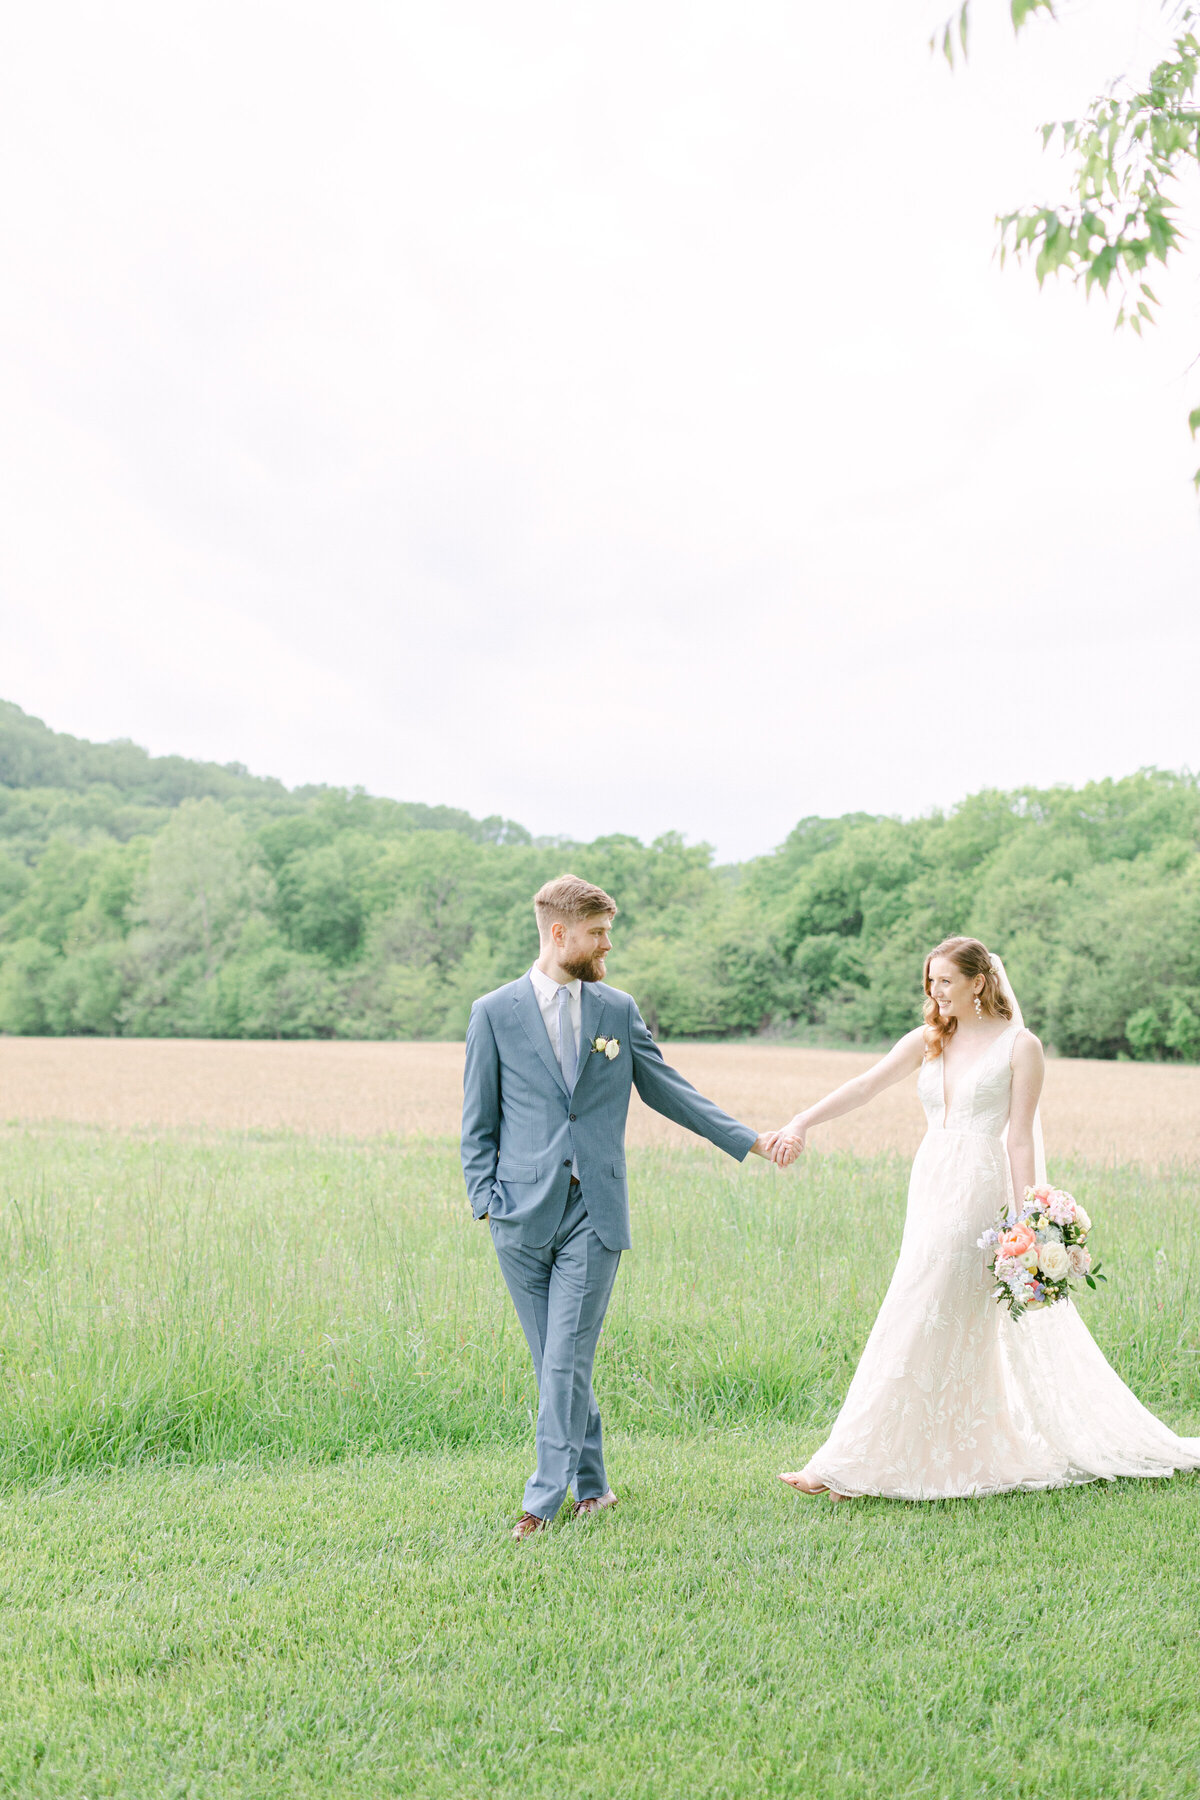 Ava-Vienneau-Nashville-Wedding-Photographer-Southall-Meadows-15